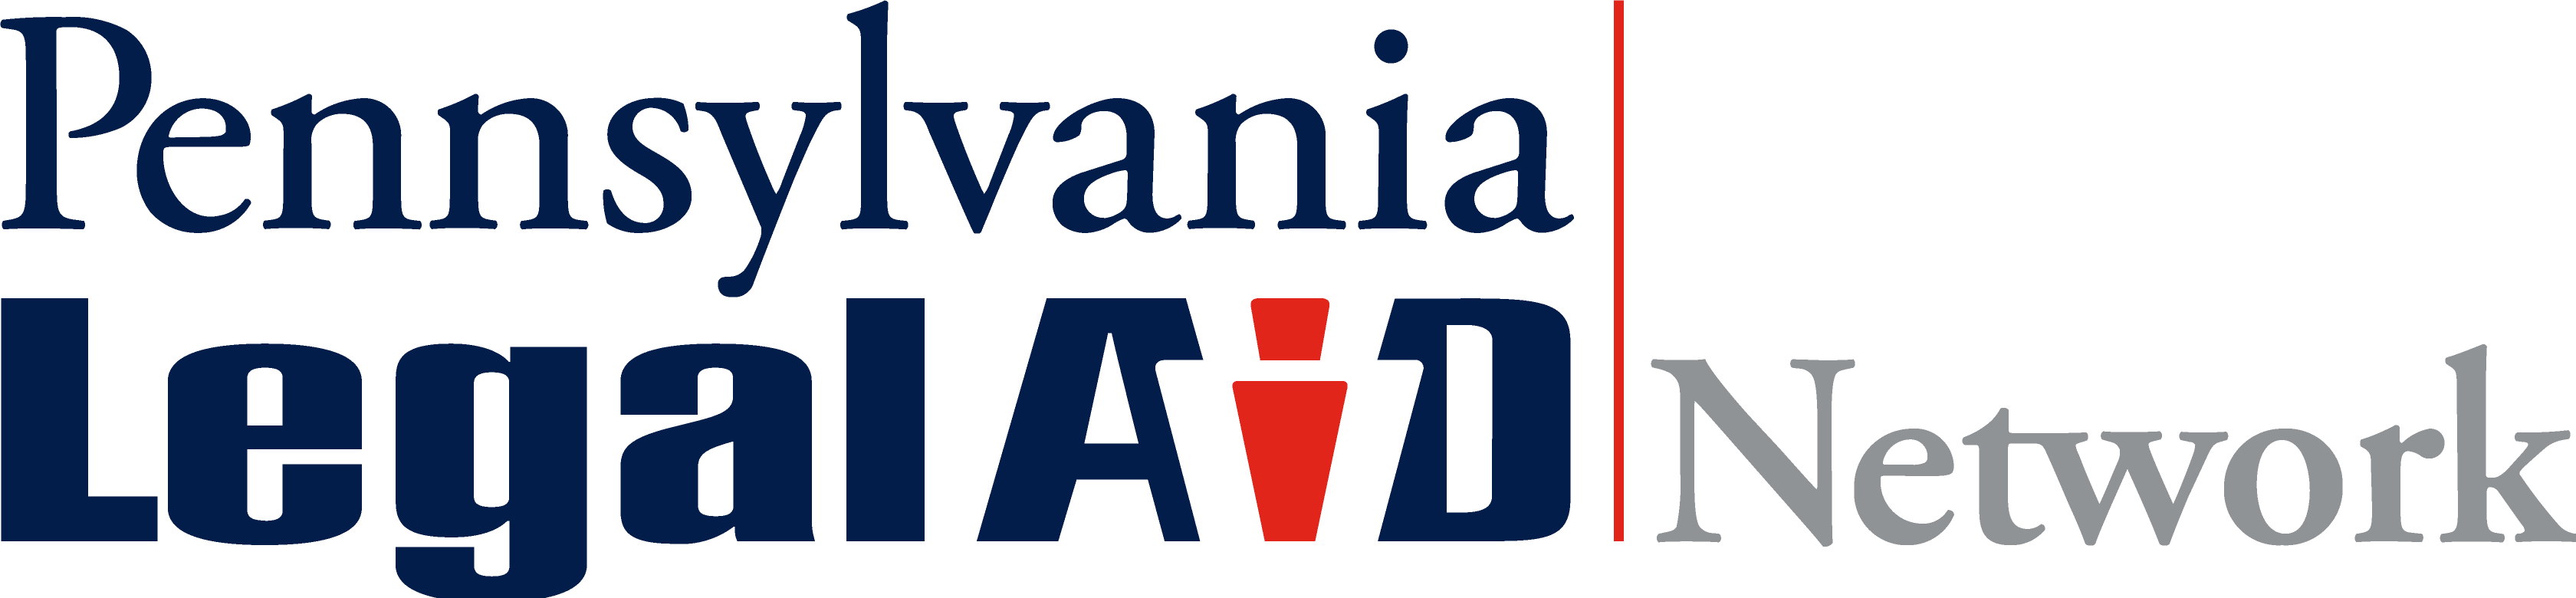 Pennsylvania Legal Aid Network